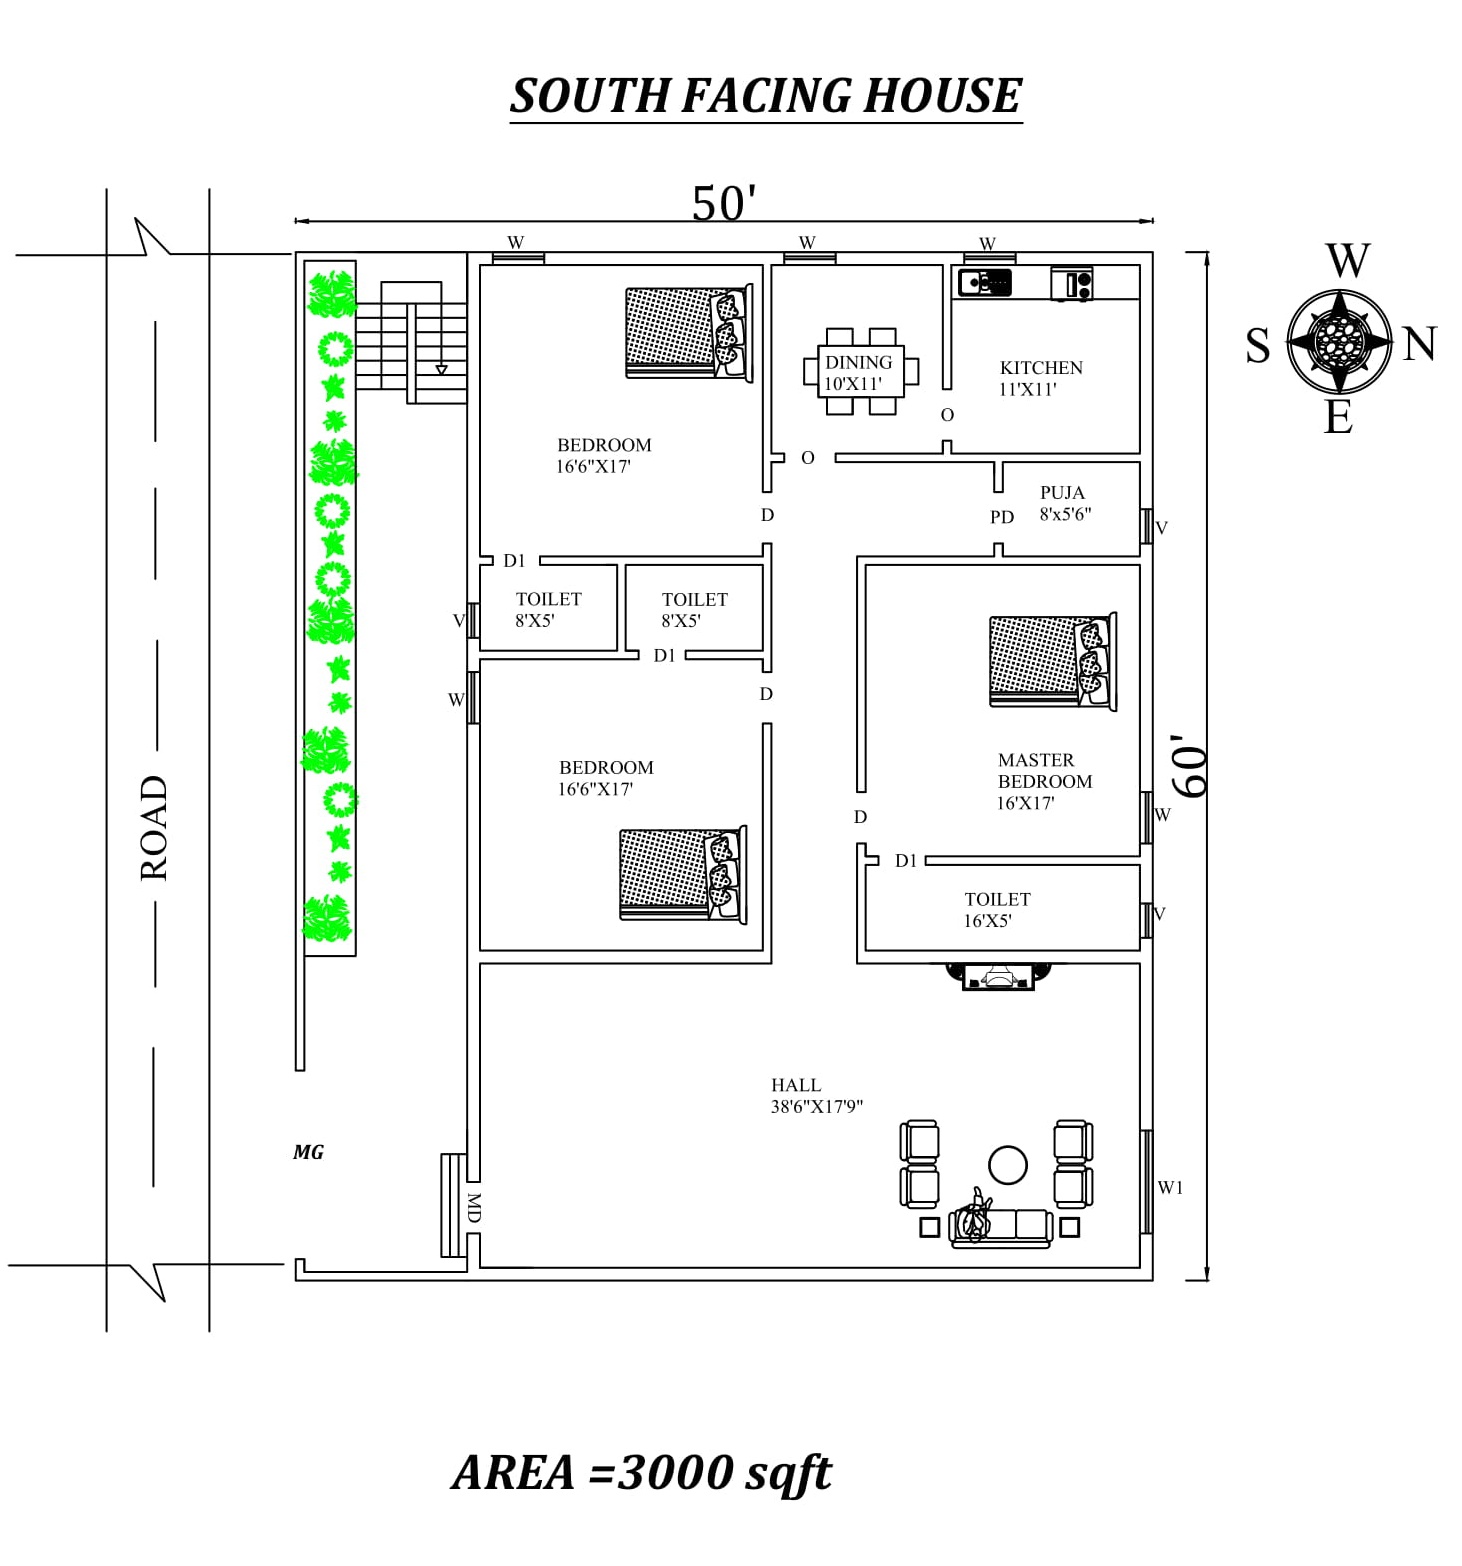 50 X60 3bhk South facing House Plan As Per Vastu Shastra 